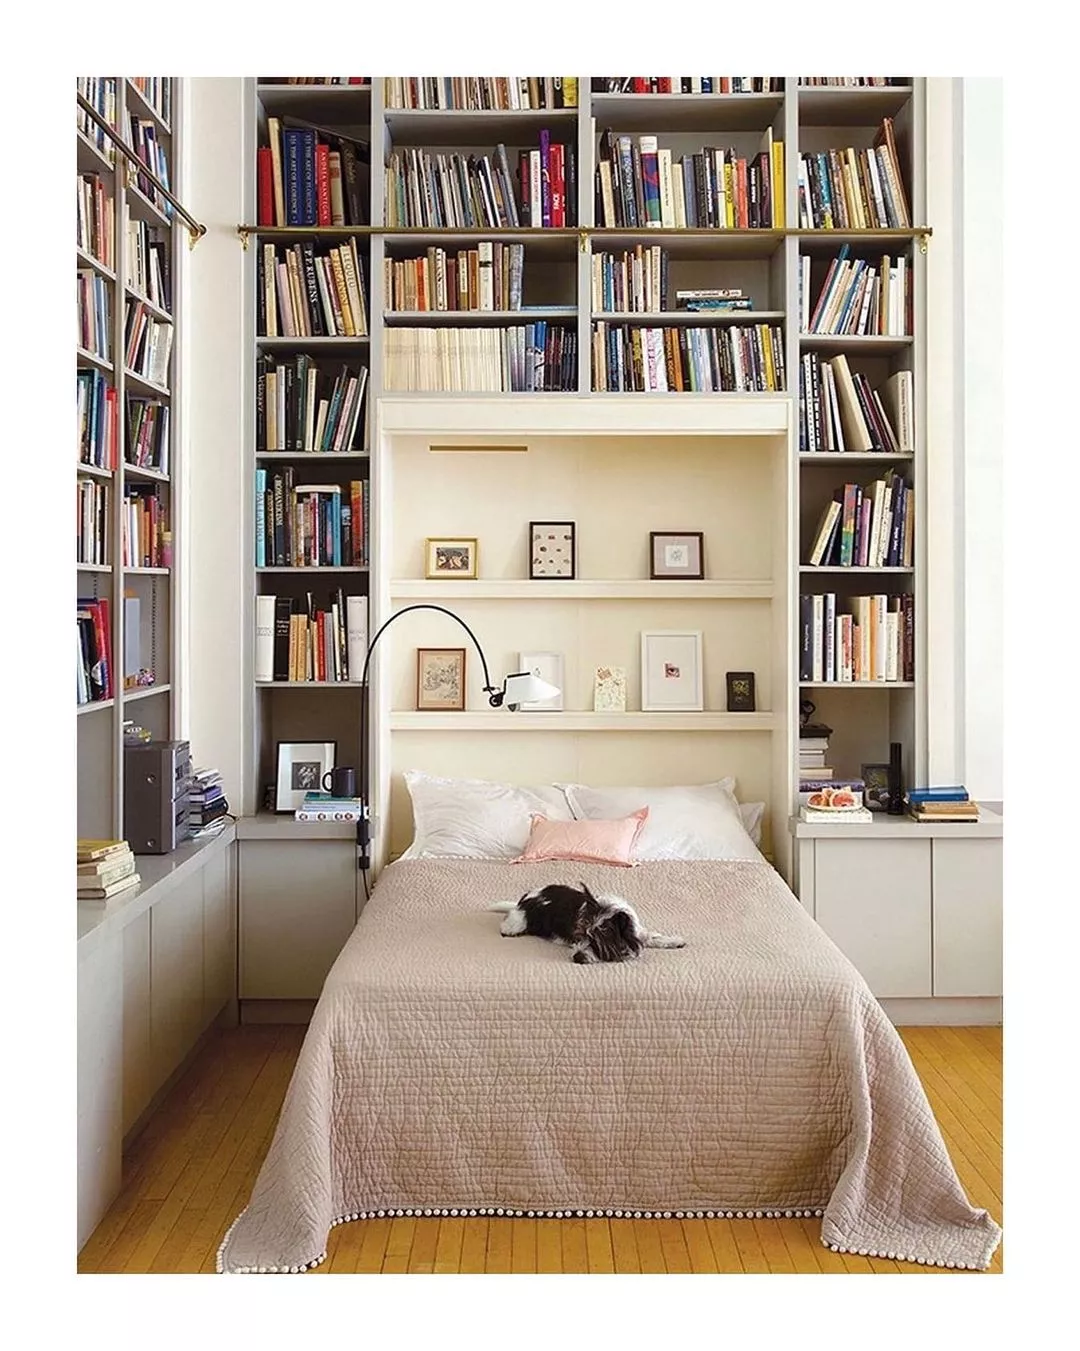 5 Best Small Bedroom Storage Ideas (Practical & Renter-friendly